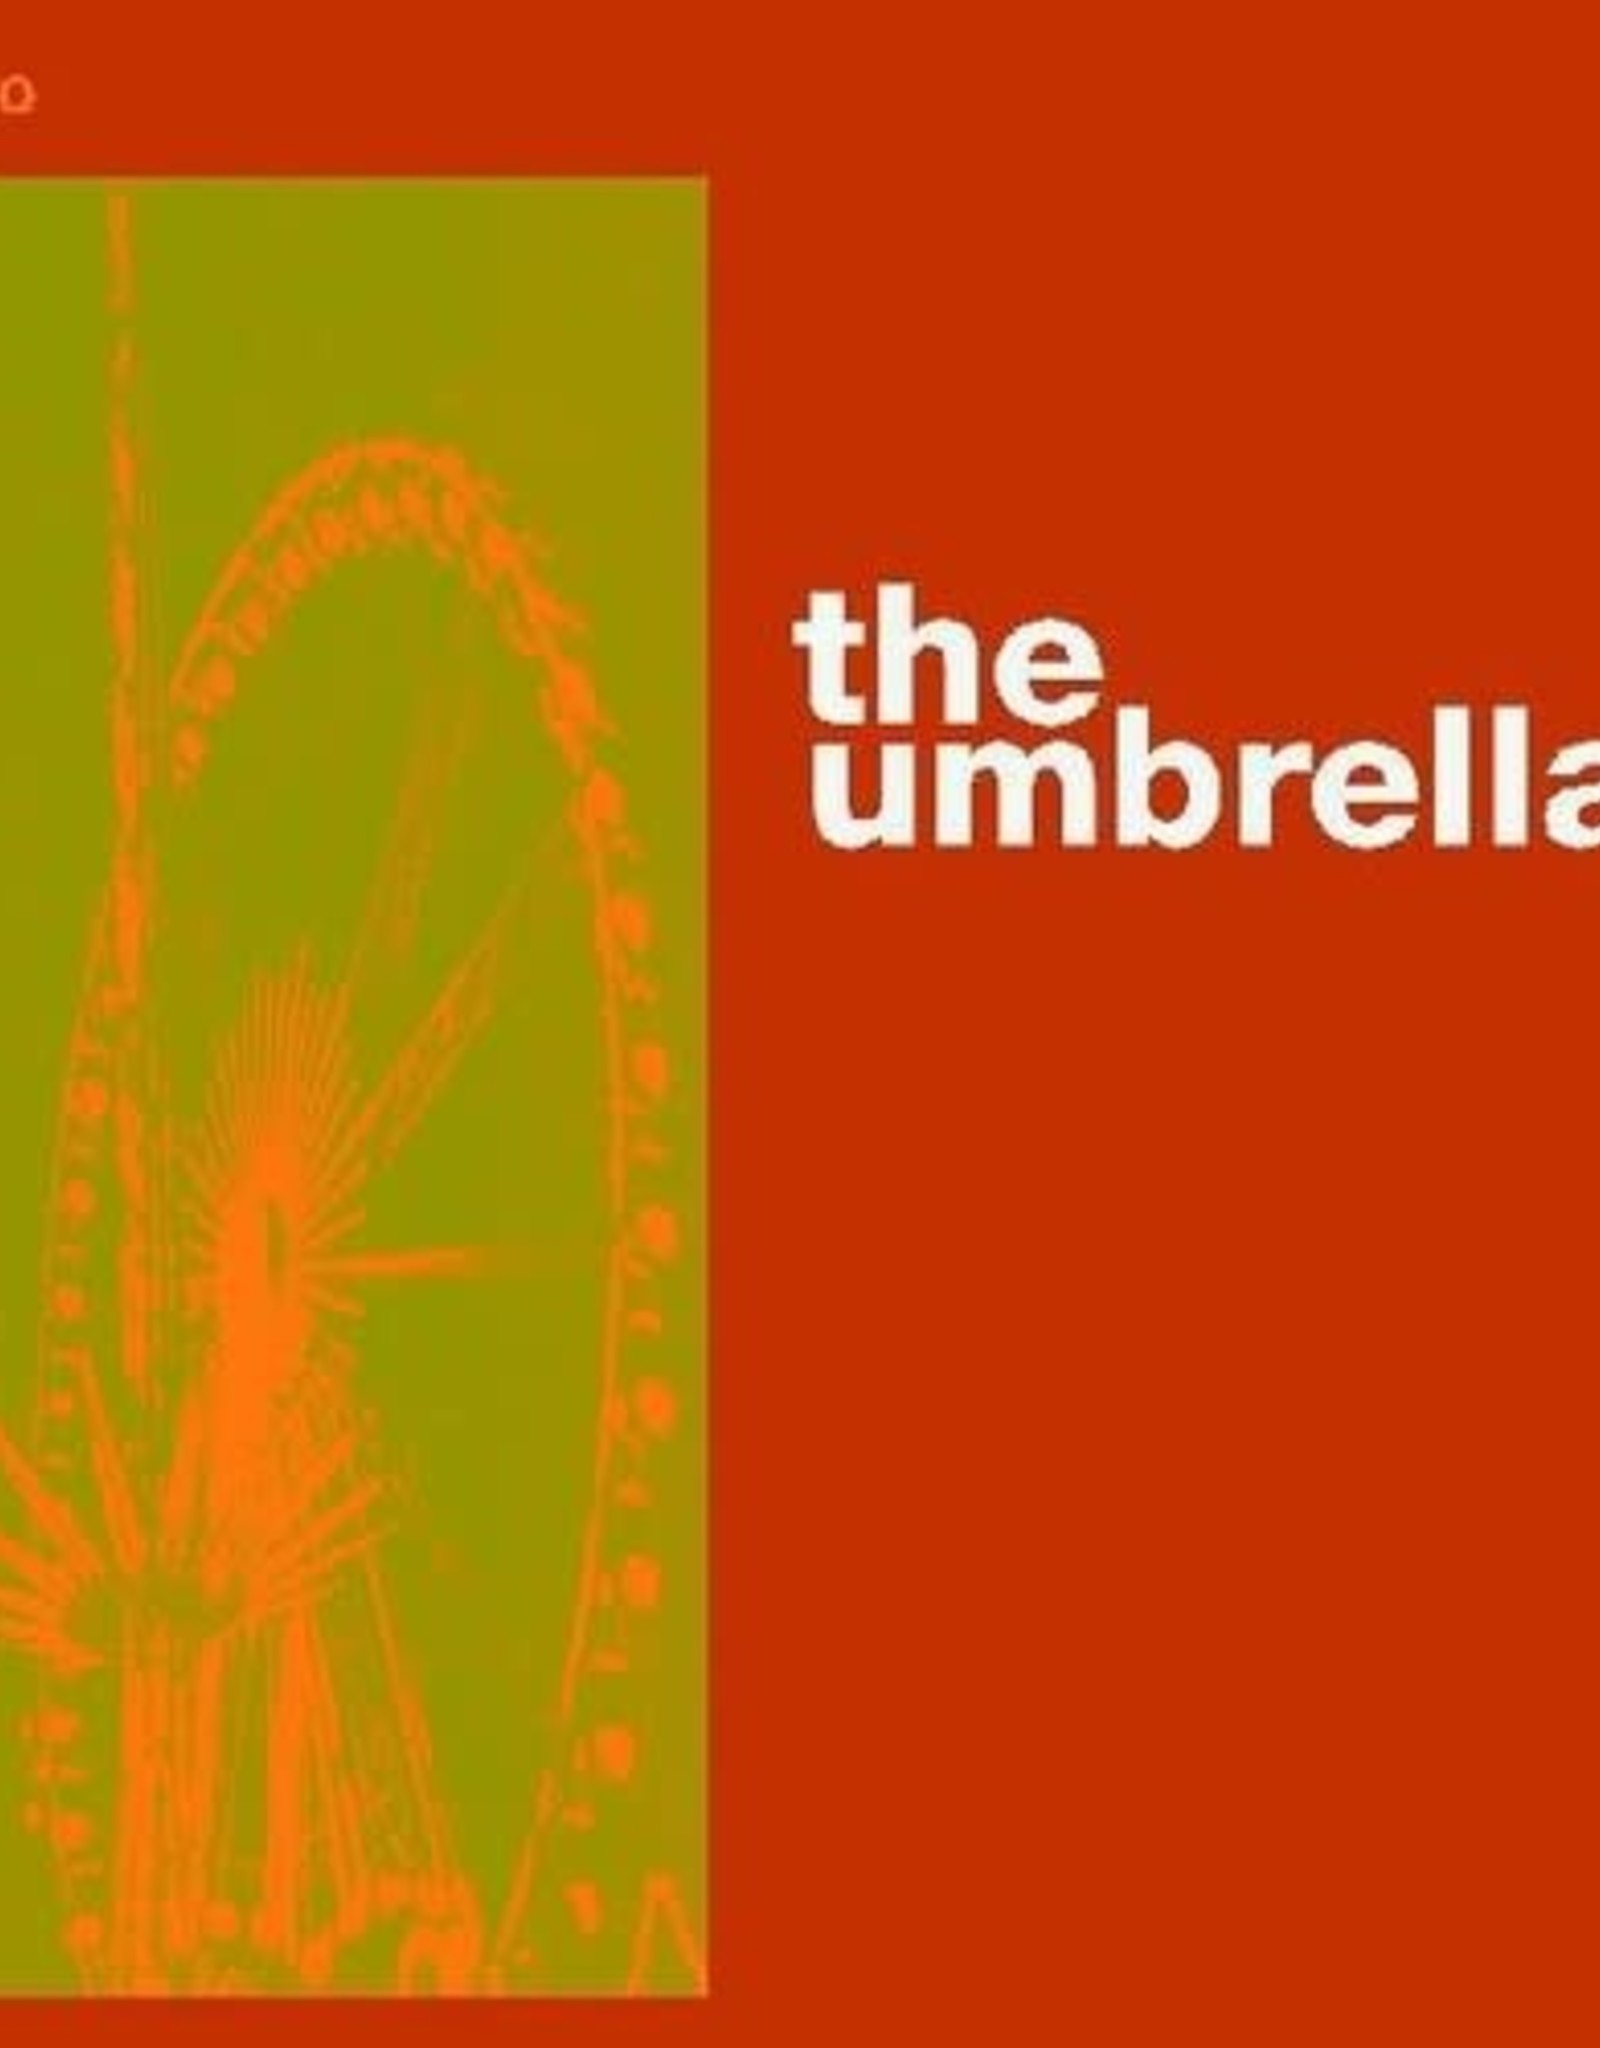 The Umbrellas - S/T (White Vinyl)